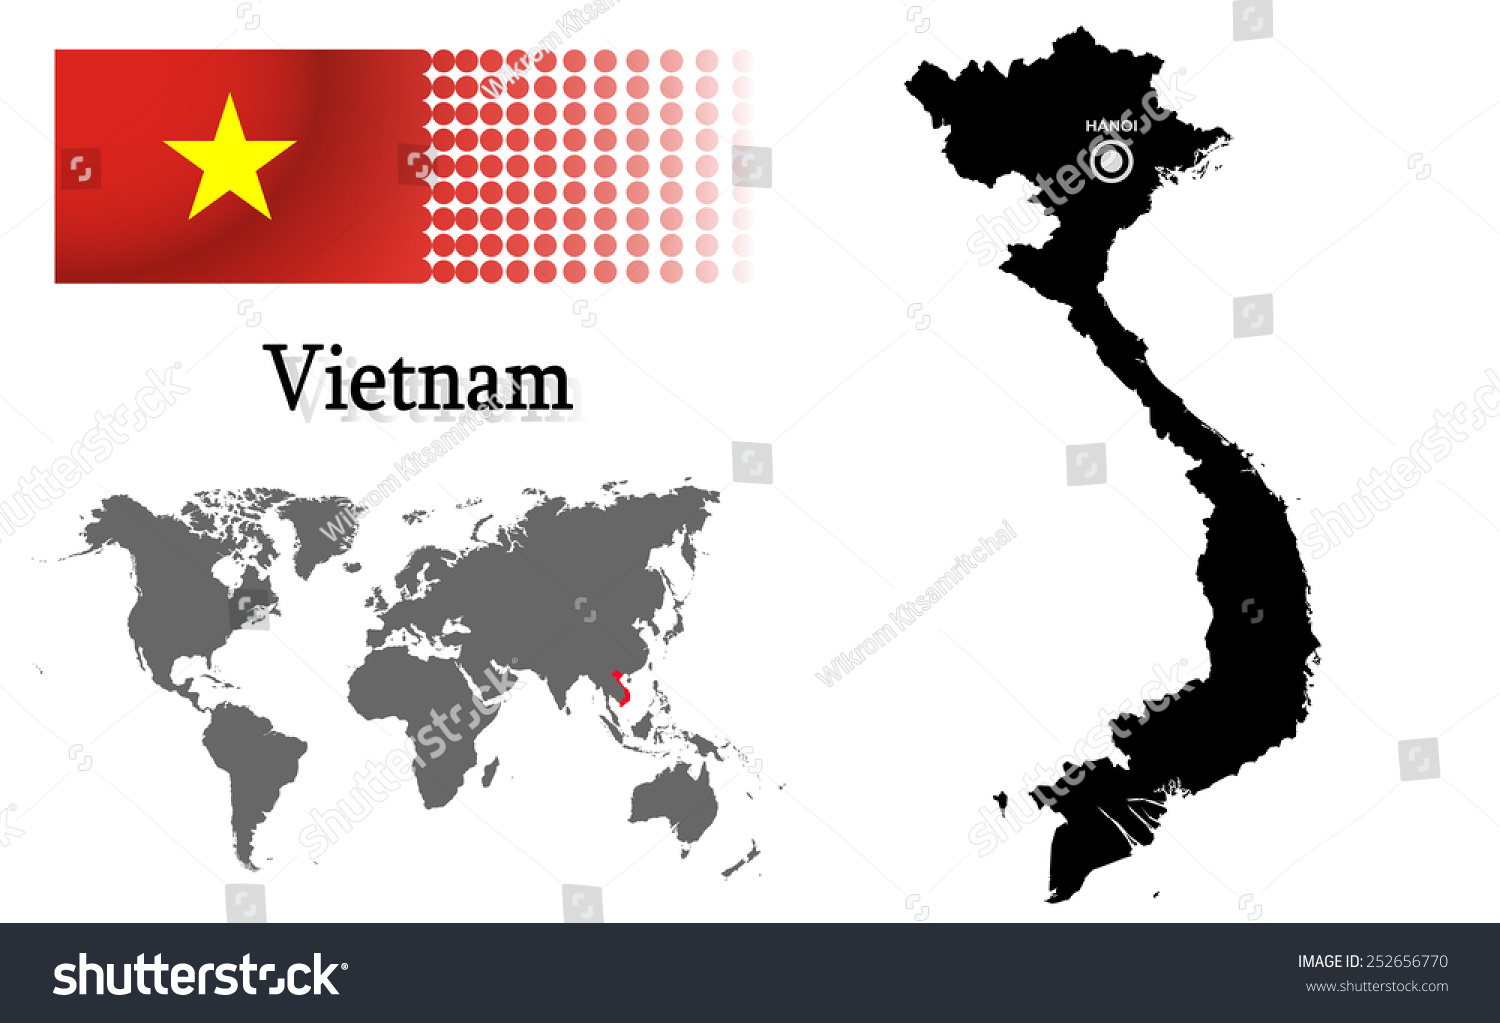 clipart map of vietnam - photo #25